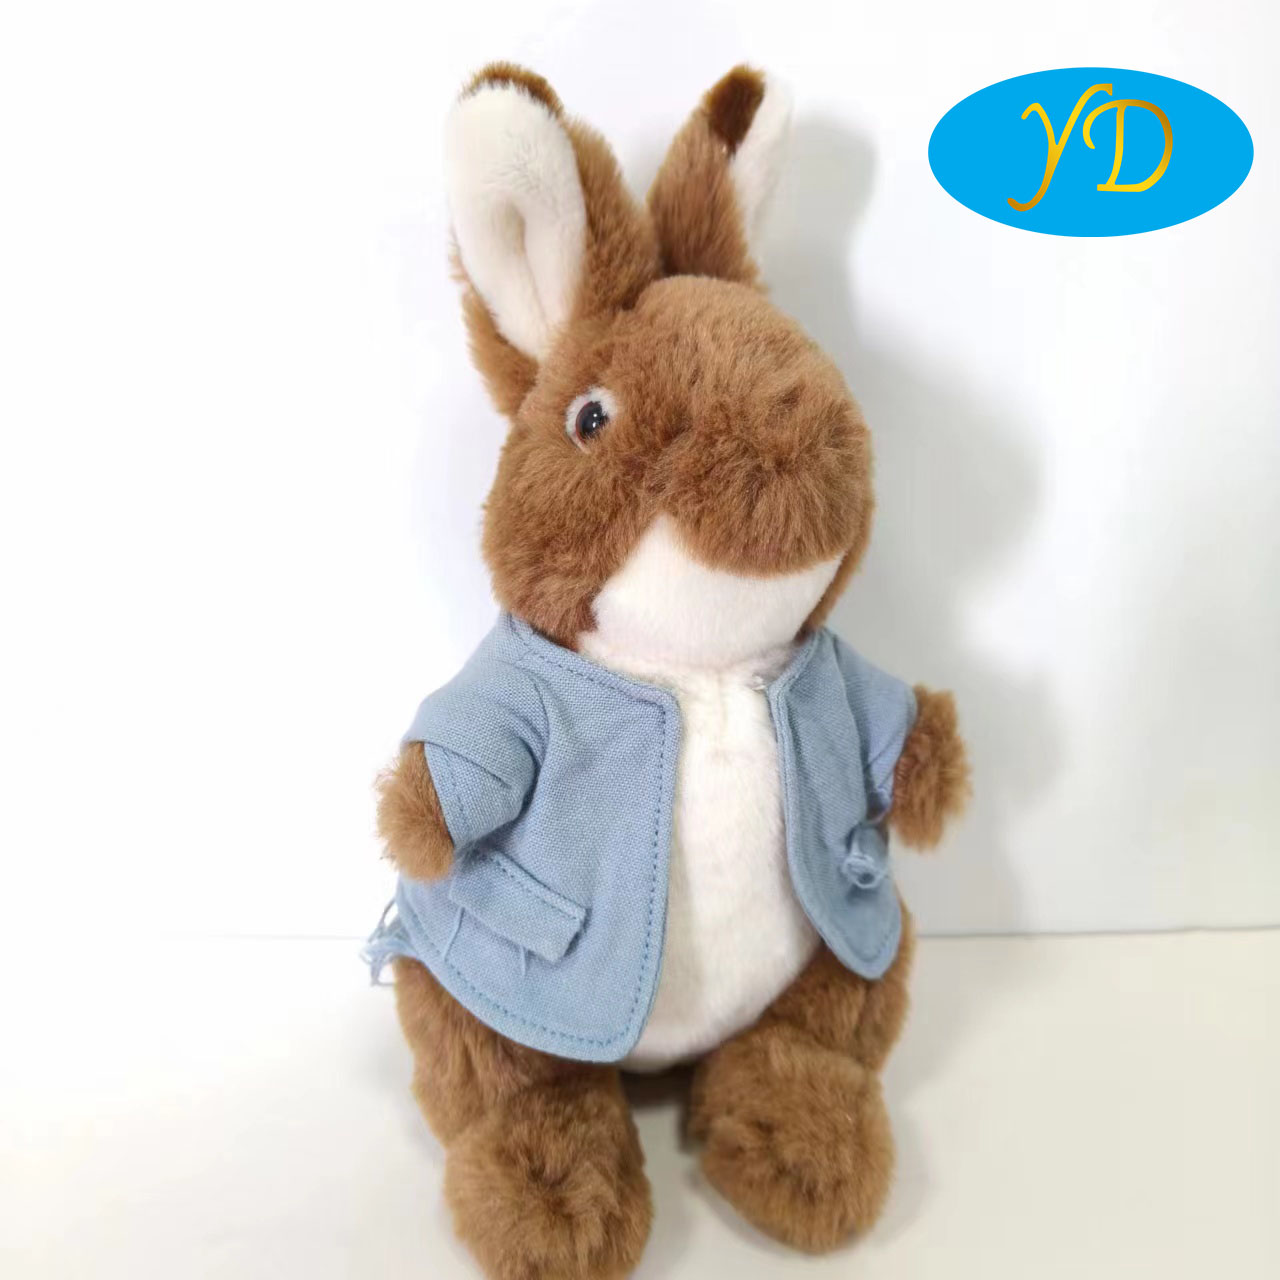 Peter Rabbit cuddly stuffed animal